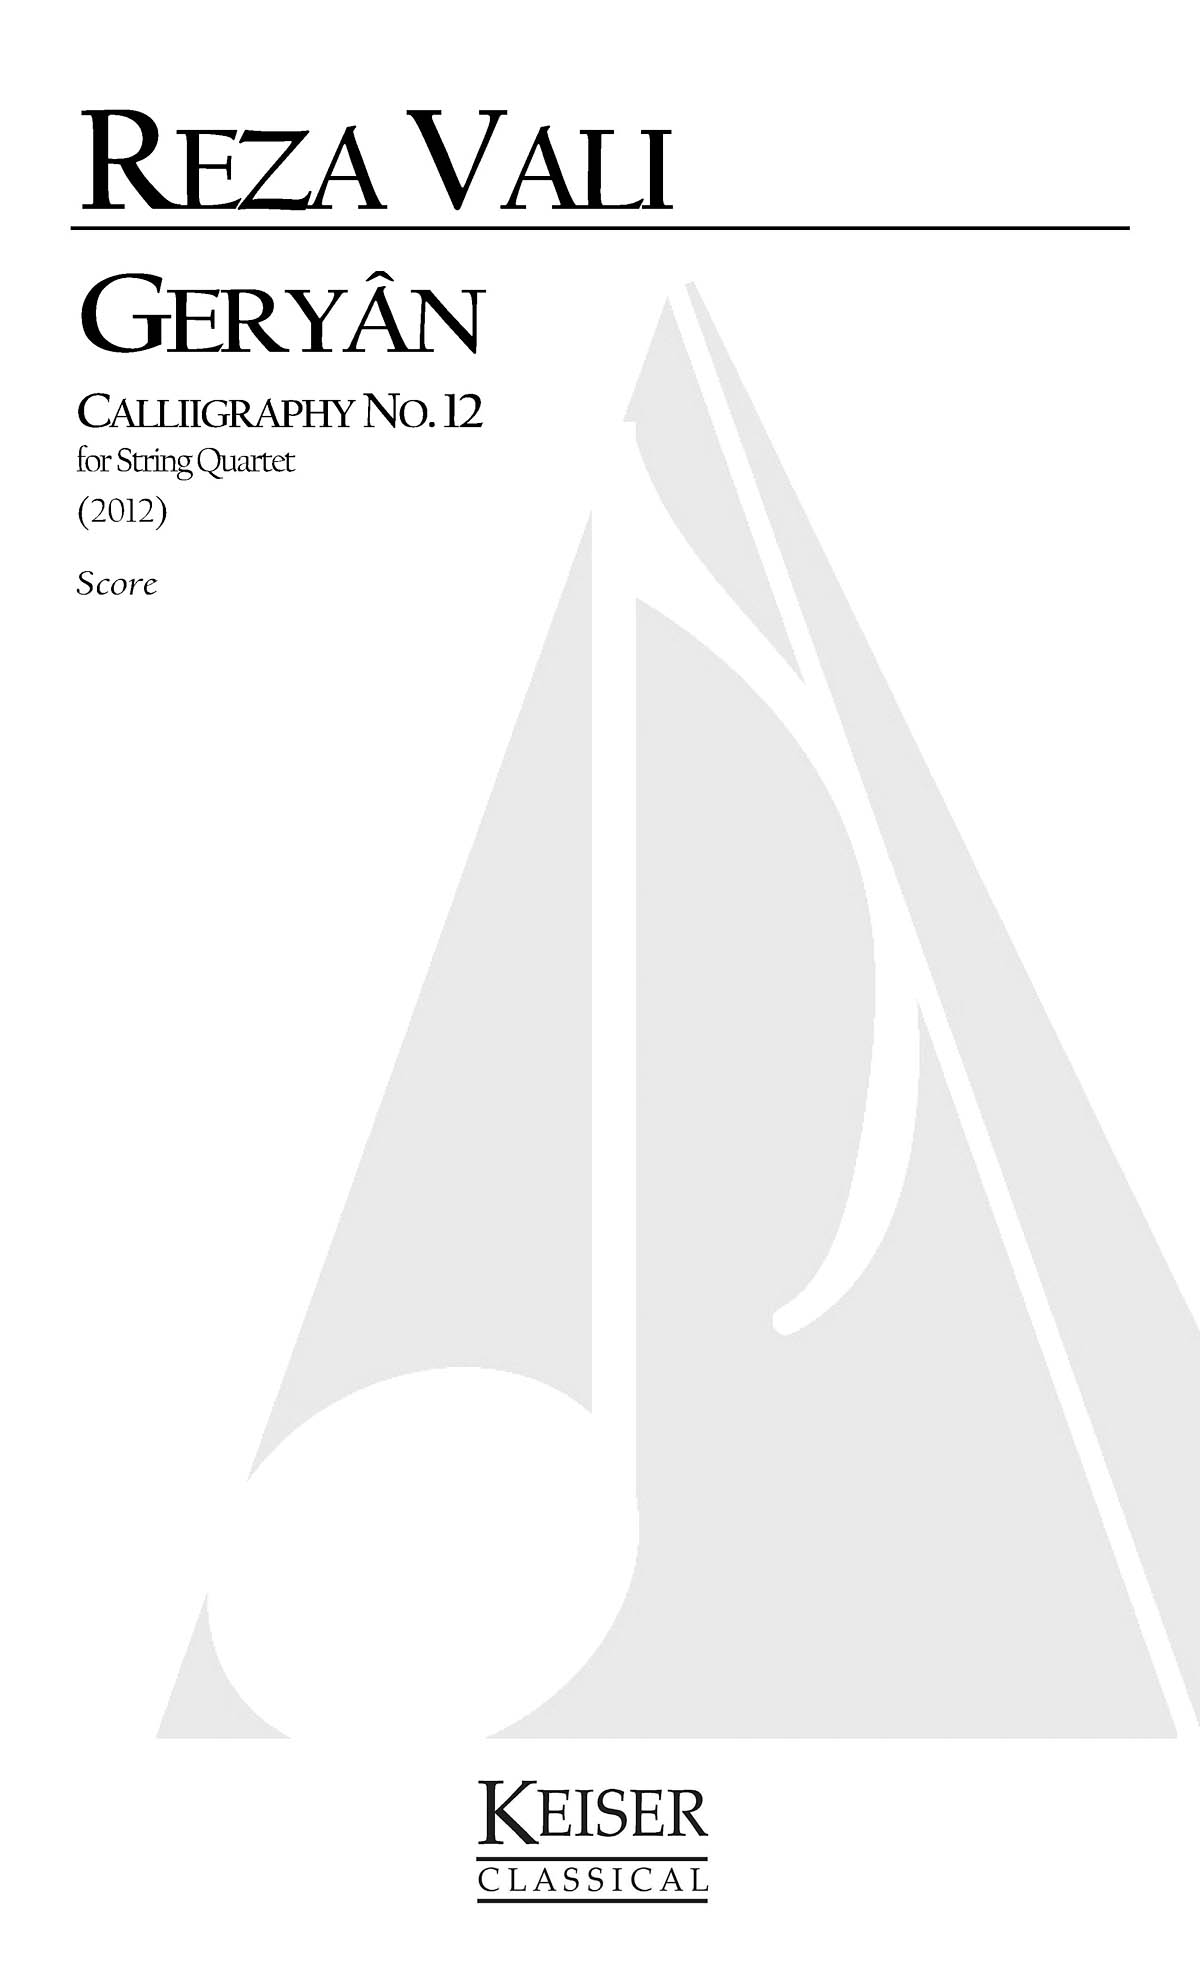 Reza Vali: Geryan: Calligraphy No. 12 for String Quartet: String Quartet: Score